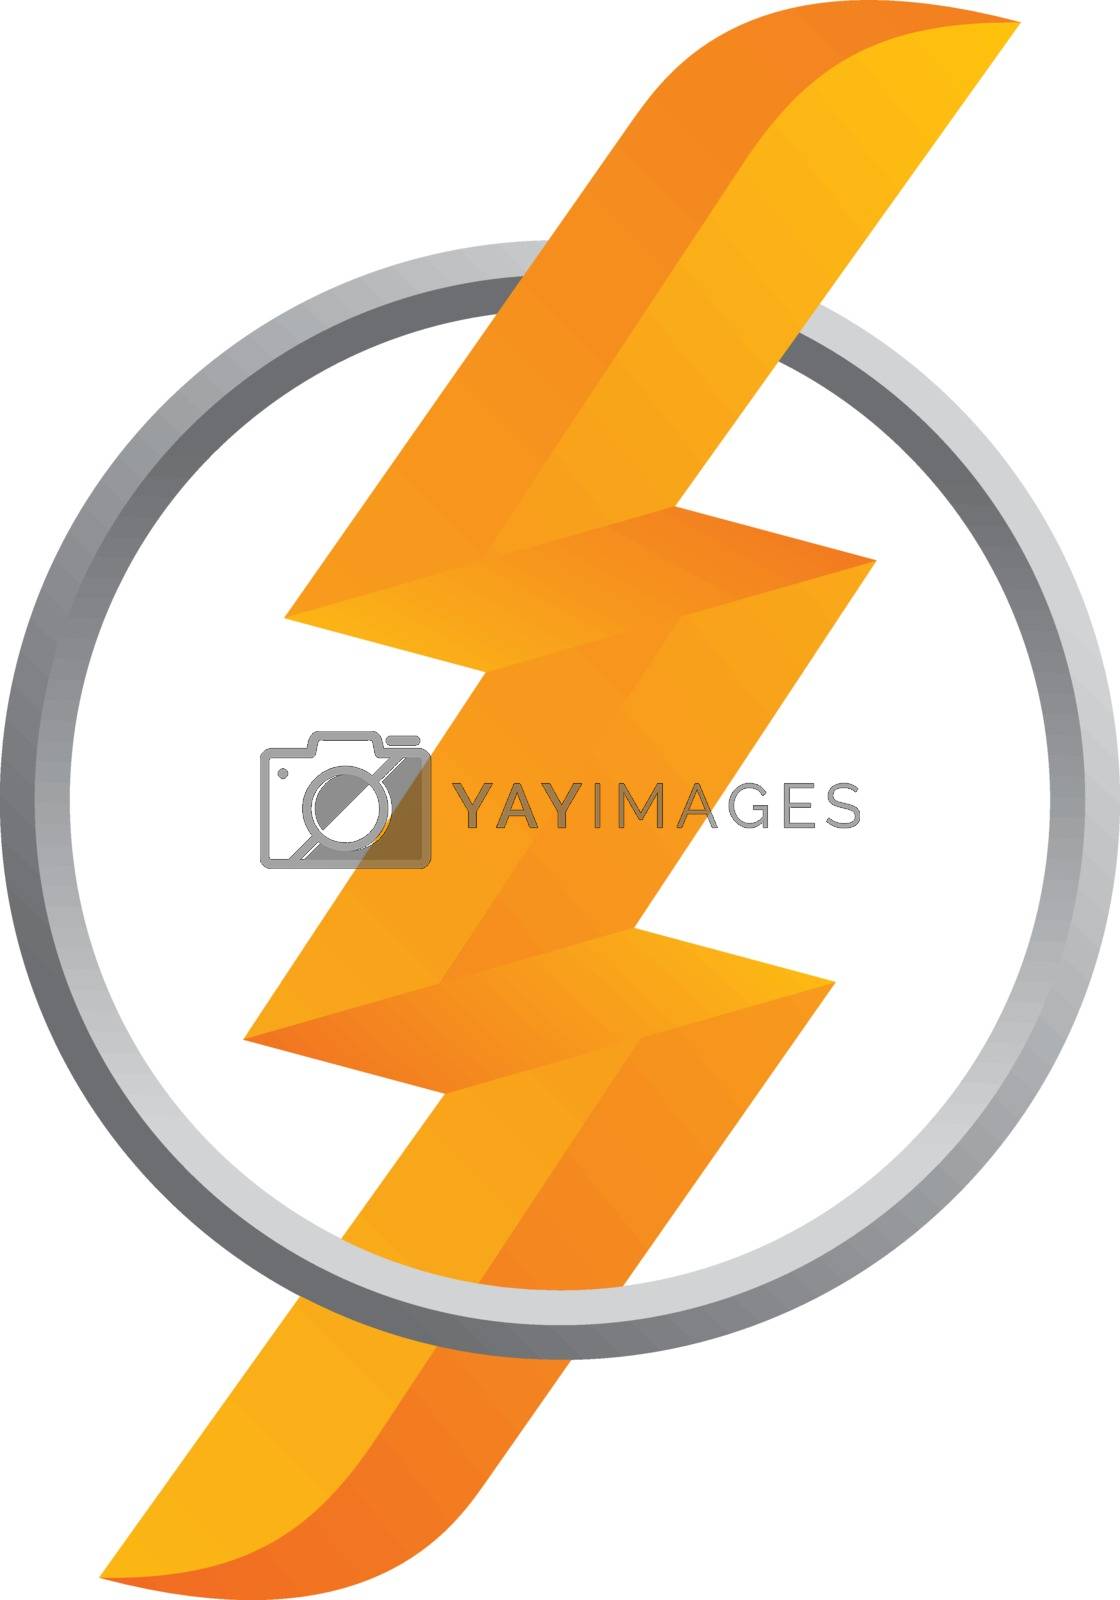 Royalty free image of orange thunder bolt sign logo by vector1st